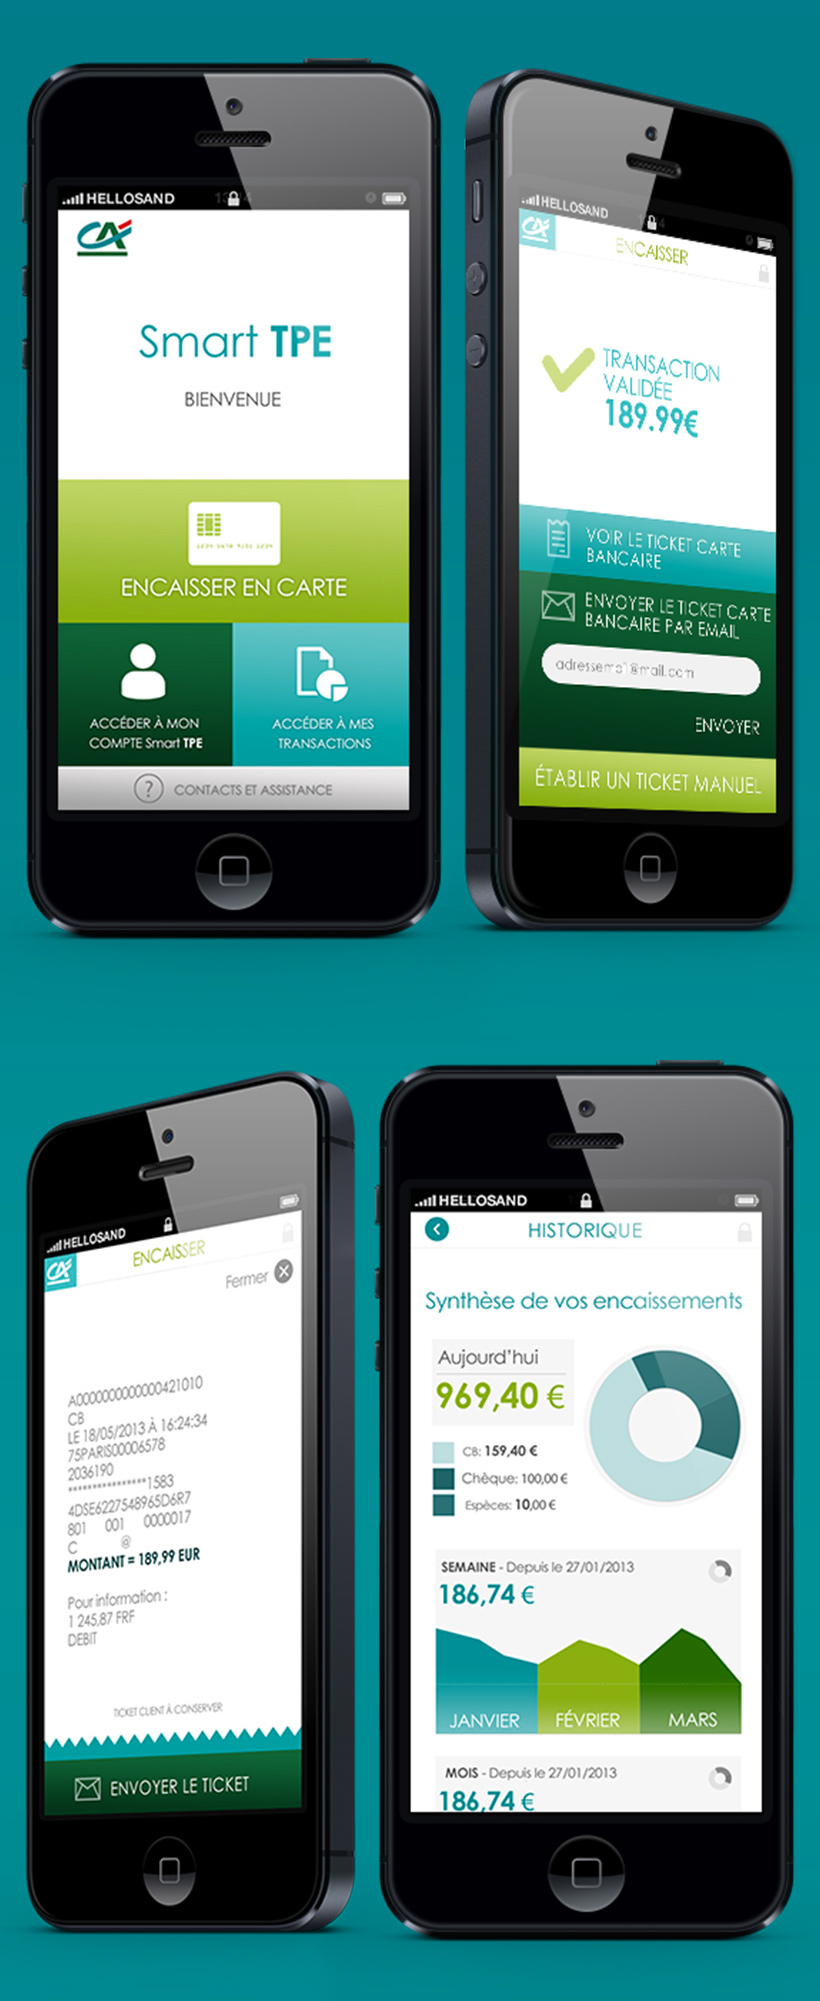 Smart TPE // Credit Agricole / Application mobile et site 